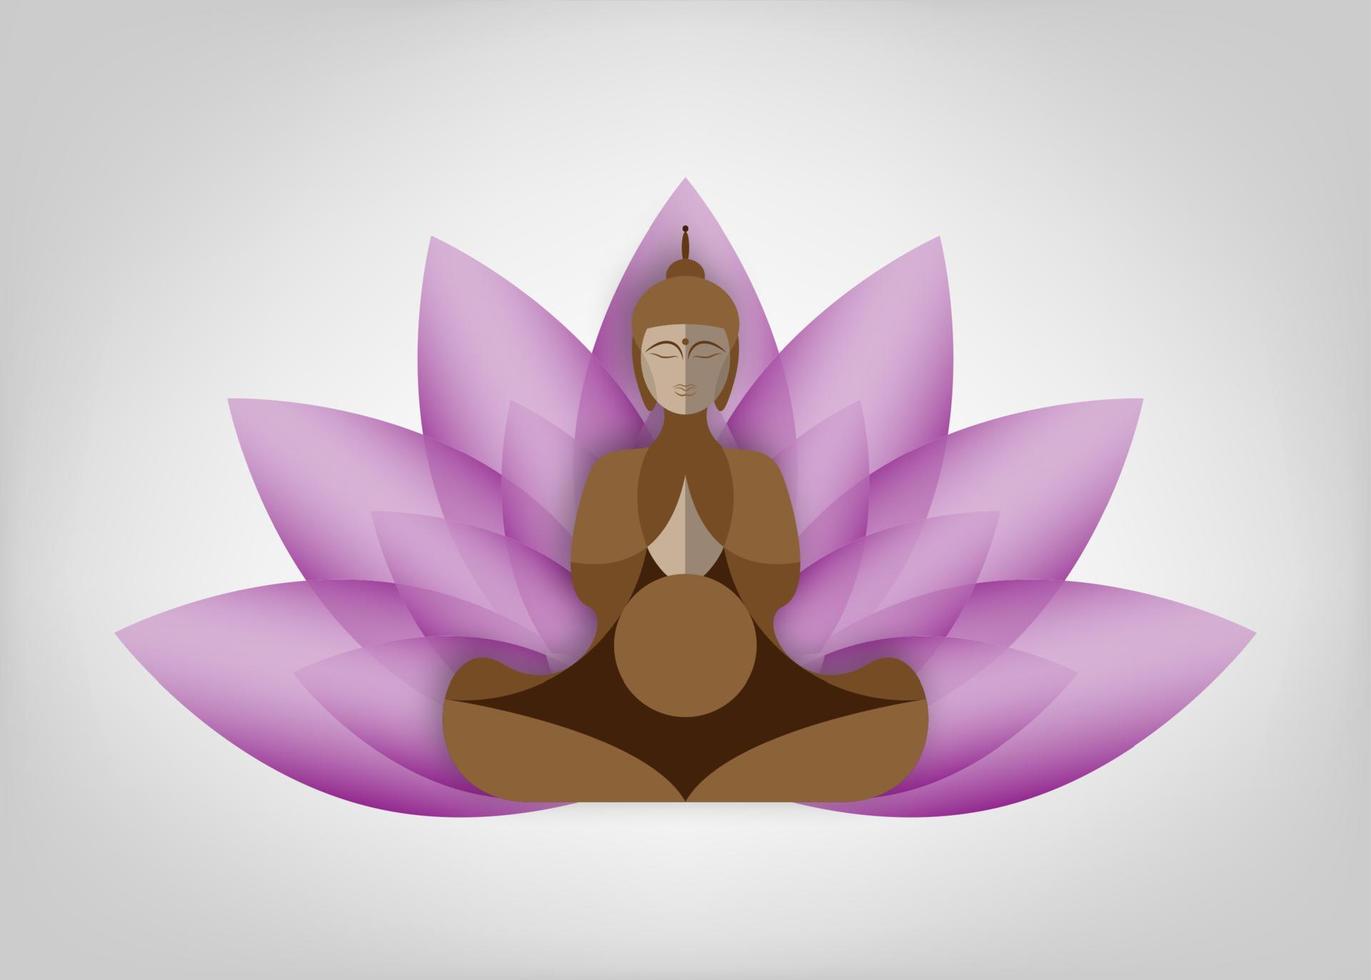 Sitting Buddha over lotus flower. Esoteric vector illustration. Vintage decorative culture background. Modern stylized drawing. Indian, Buddhism, spiritual art. Tattoo, spirituality, Thai god, yoga